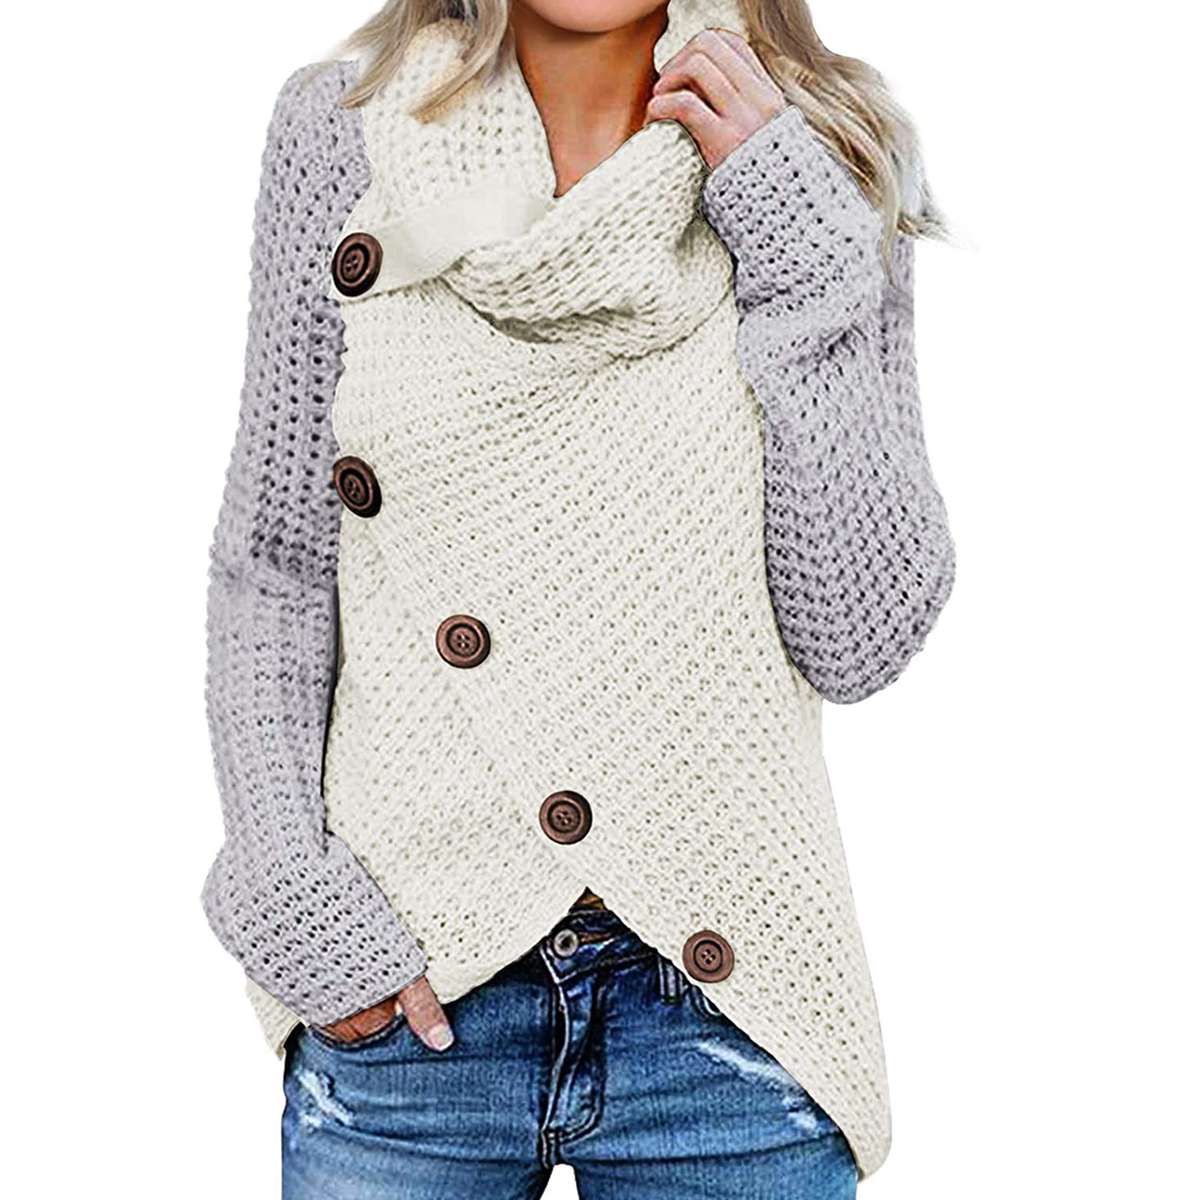 Asvivid Womens Button Turtle Cowl Neck Asymmetric Hem Wrap Pullover Sweater Tops